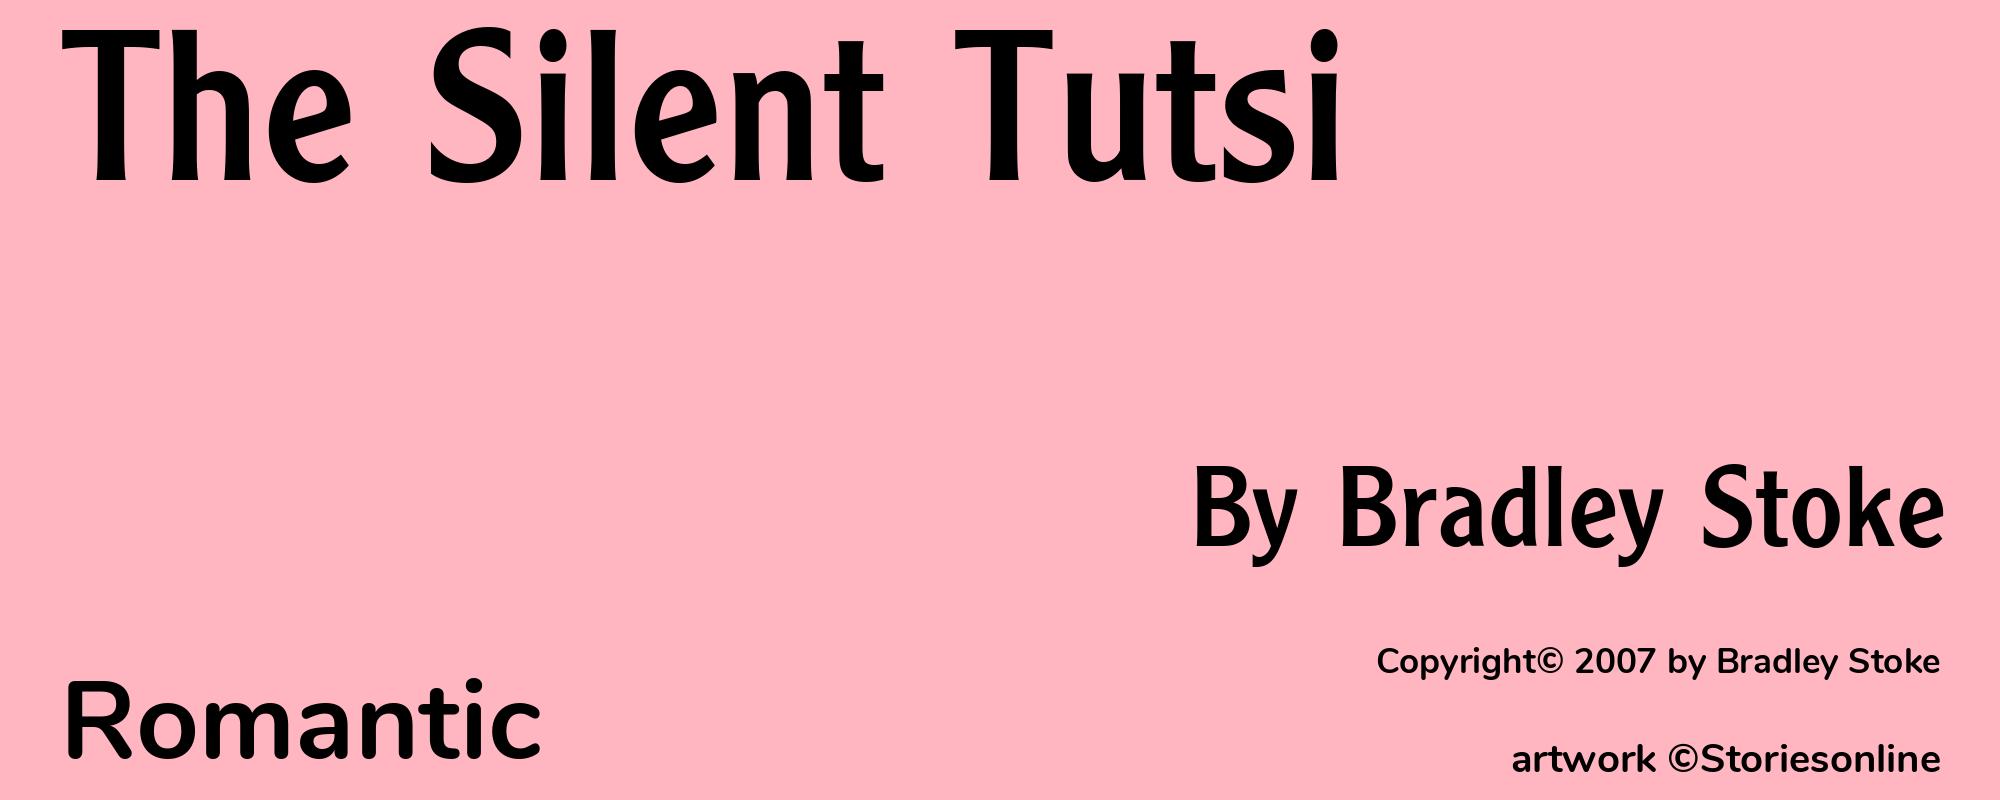 The Silent Tutsi - Cover